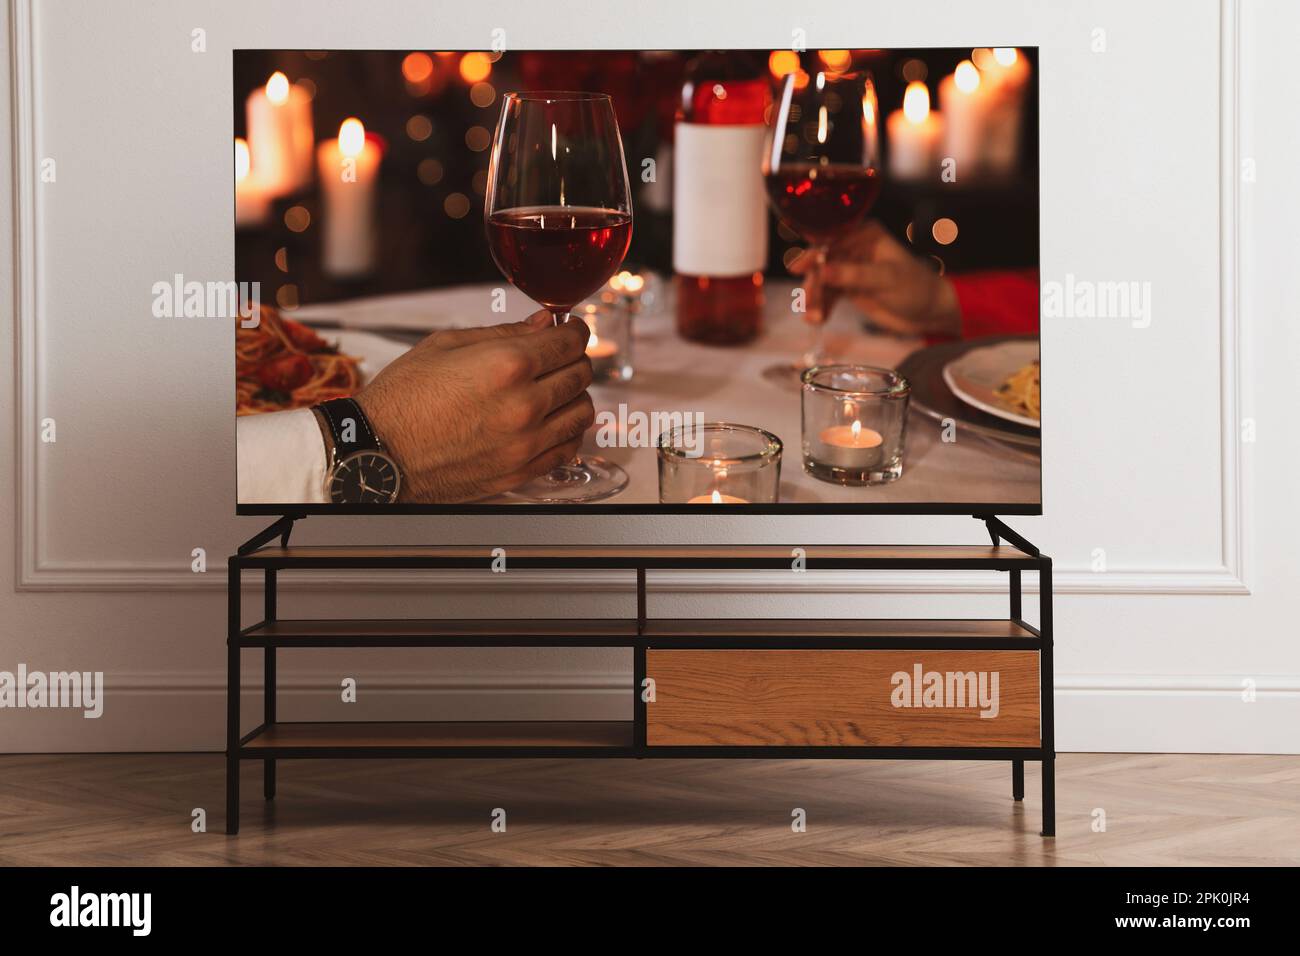 Scene of romantic movie on TV in room Stock Photo